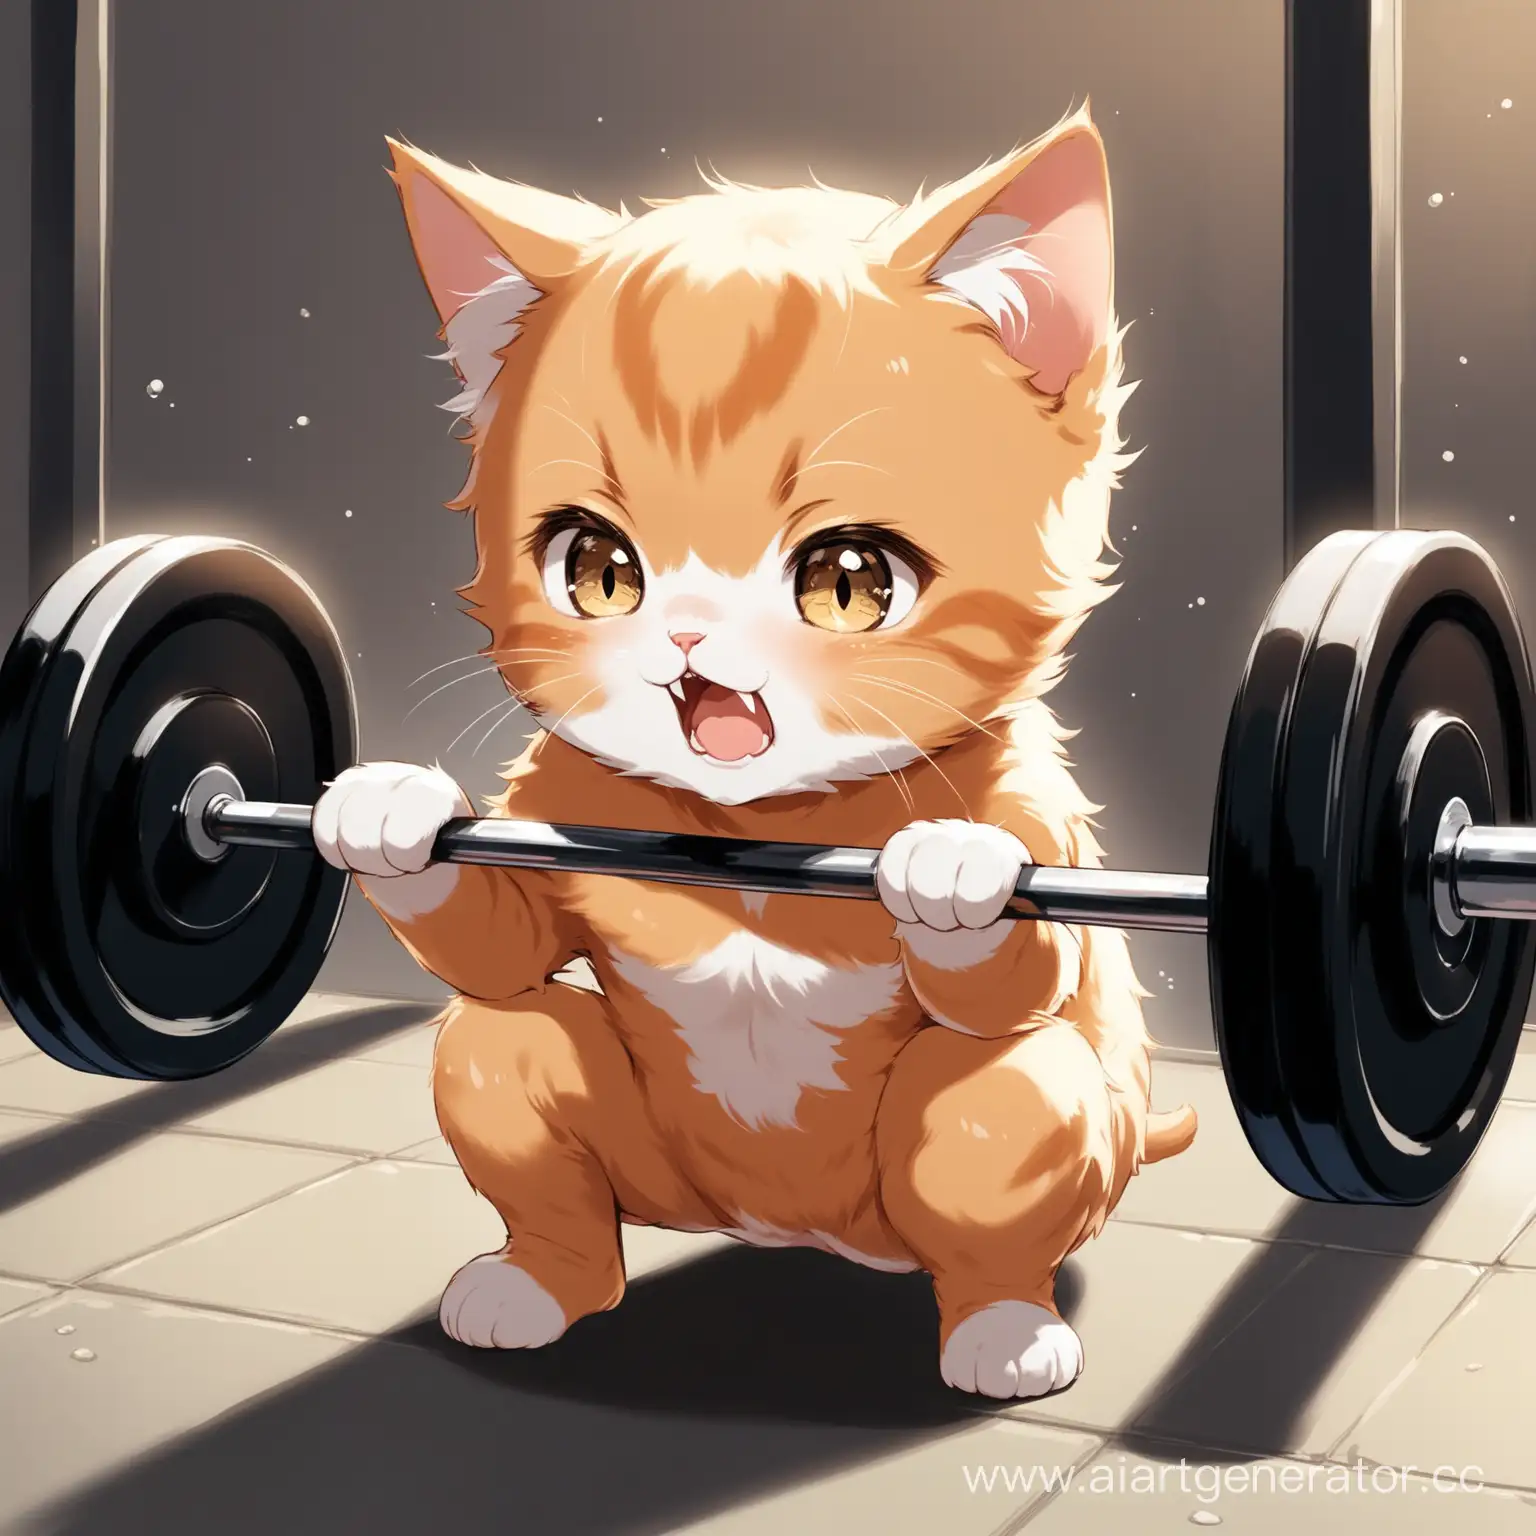 Kitten-Weightlifting-Struggles-Adorable-Feline-Effort-with-Barbell